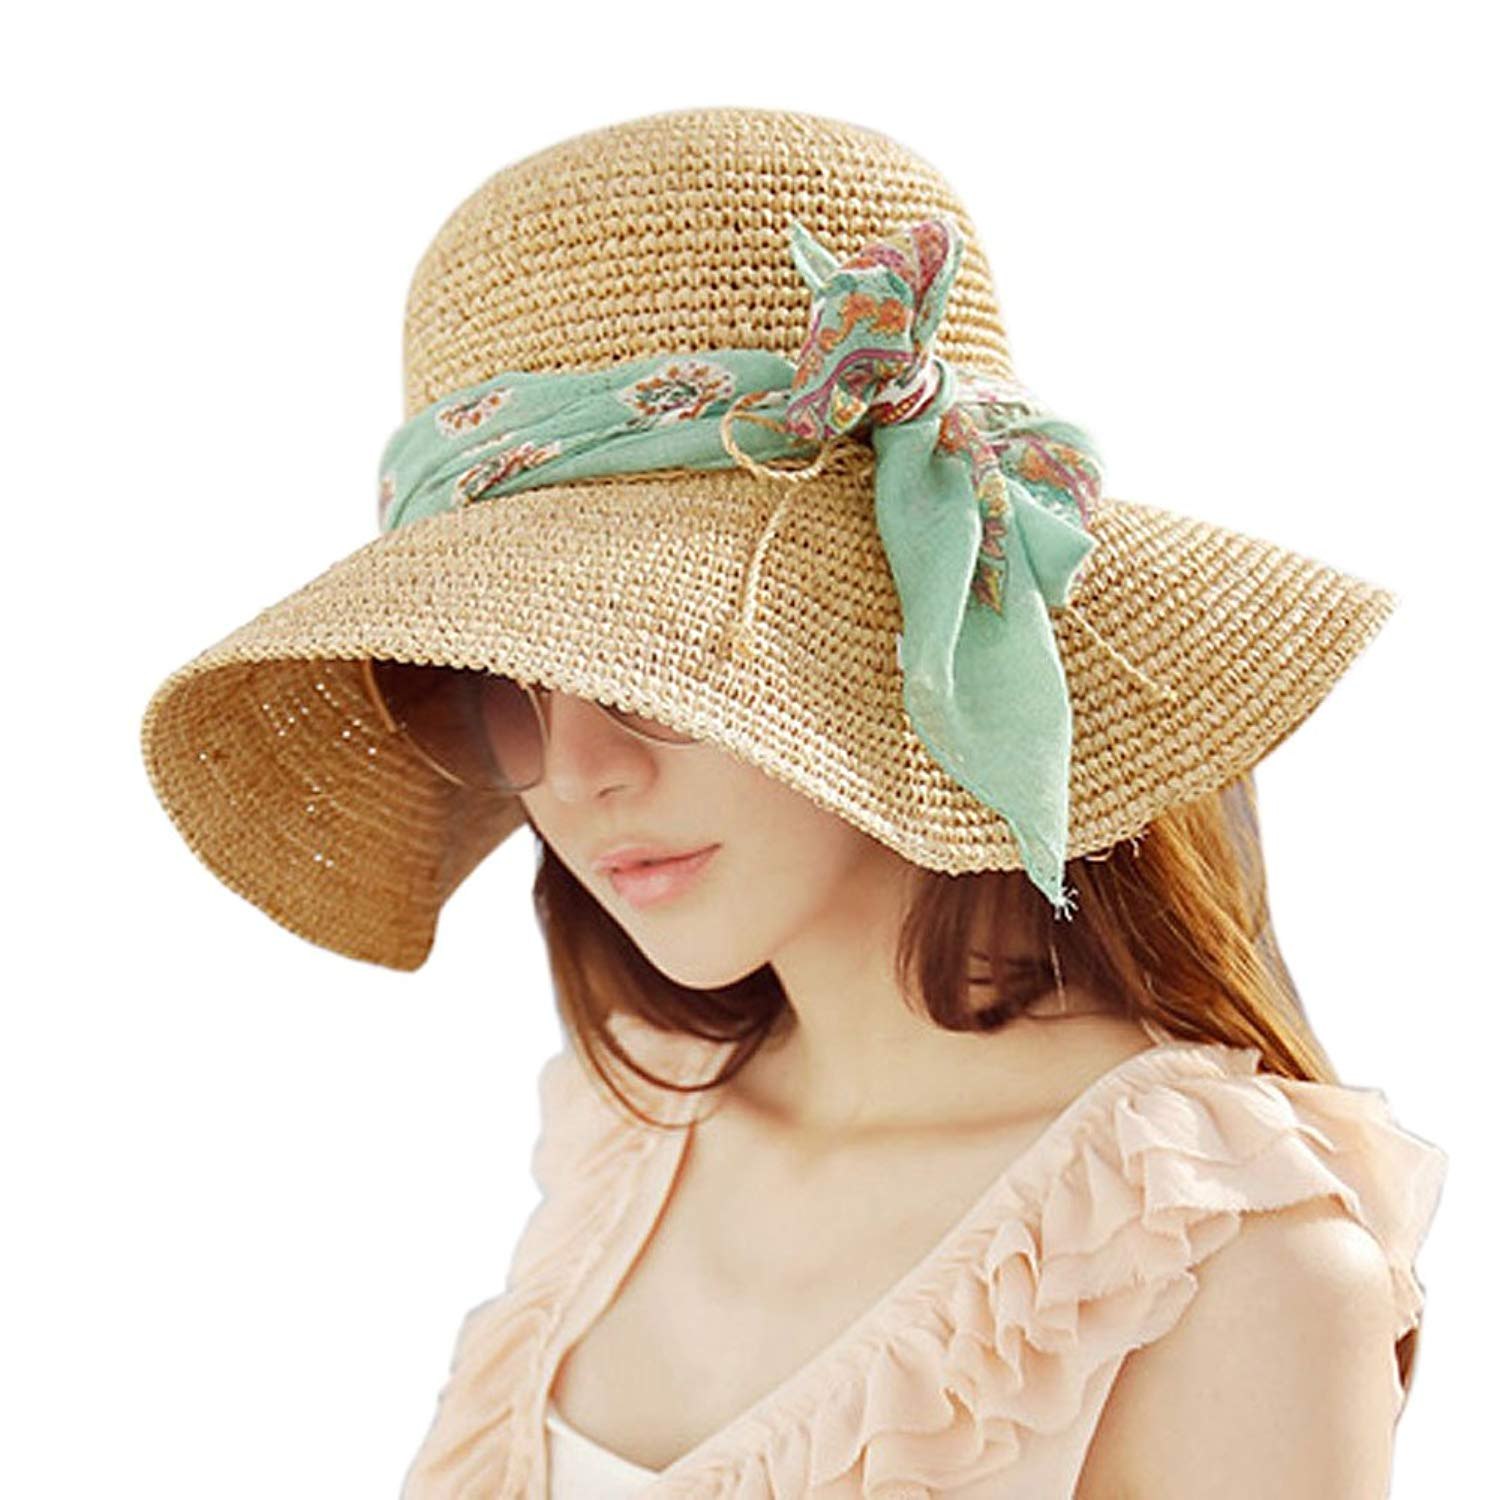 Большая соломенная шляпа. Соломенная Панама женская. Панама широкополая женская. Пляжная шляпа. Летняя шляпа.